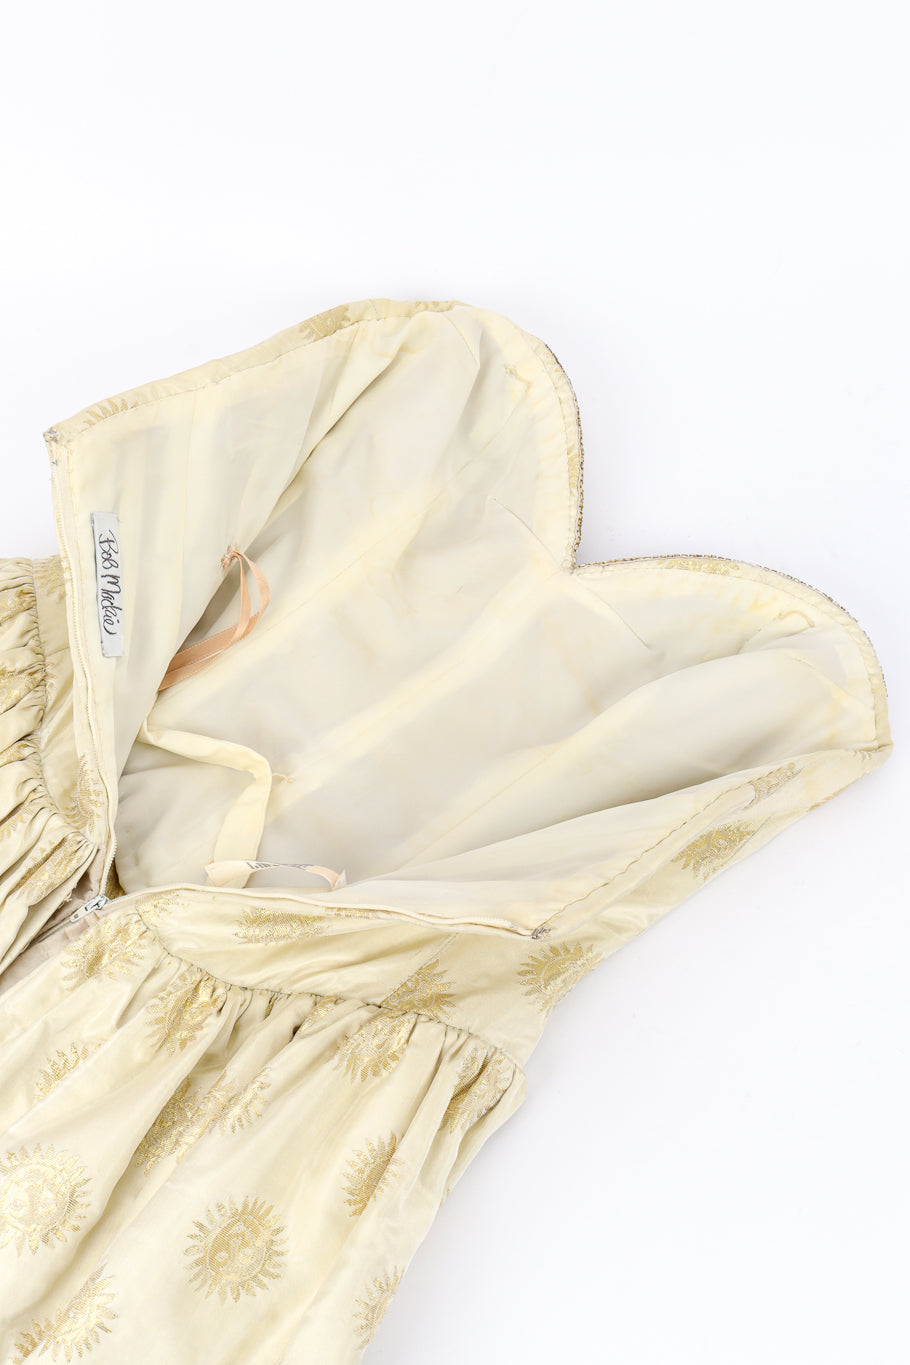 Vintage Bob Mackie Sunburst Strapless Gown back unzipped @recessla